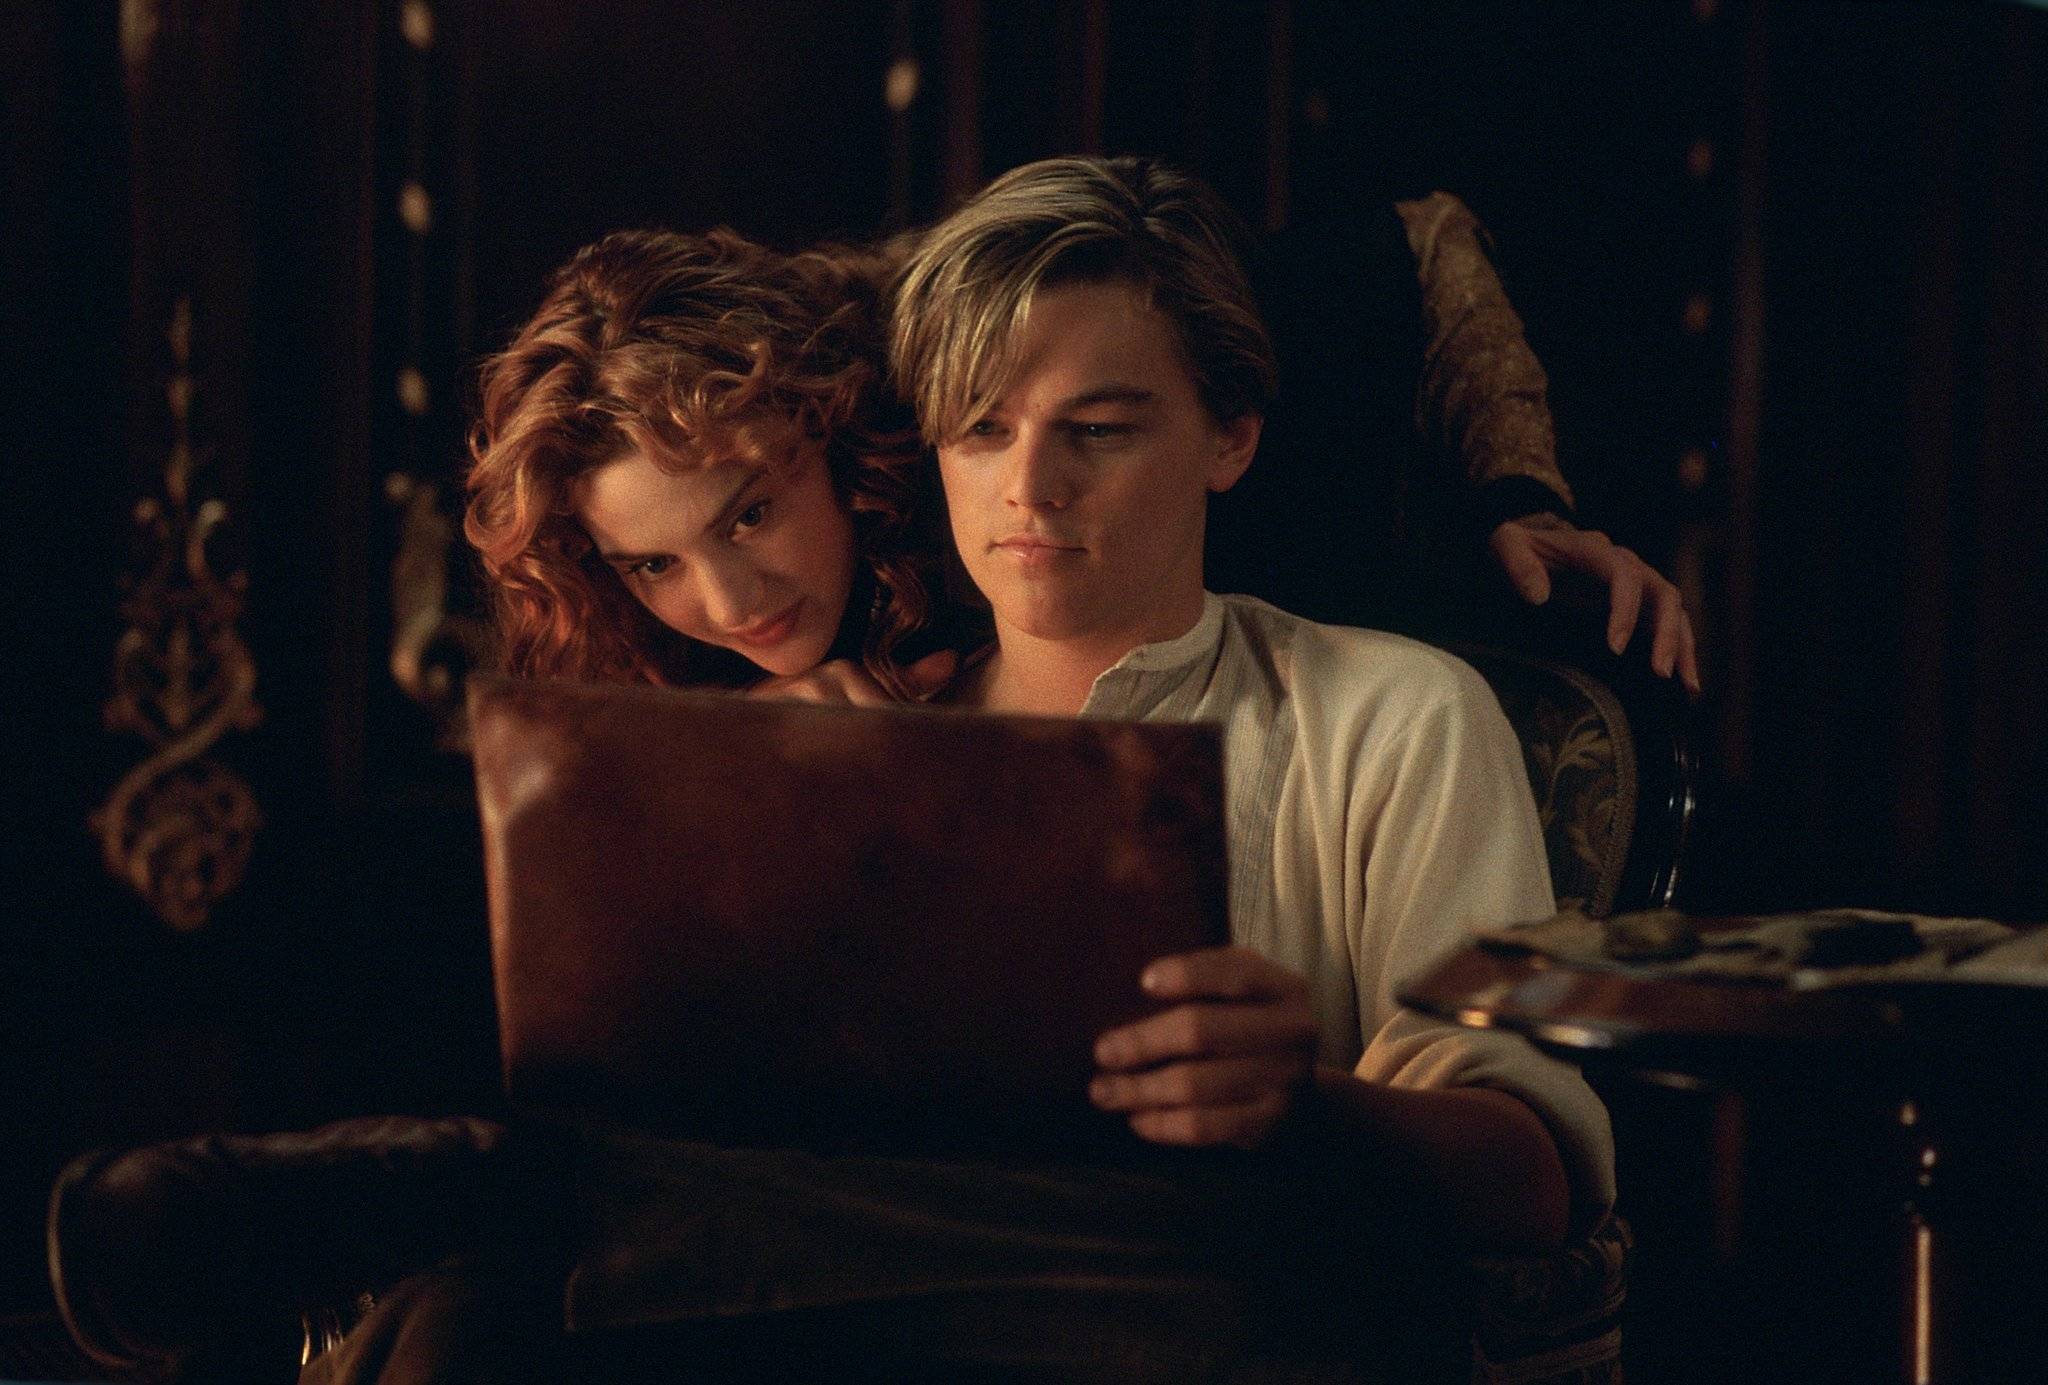 Kate Winslet et Leonardo DiCaprio dans "Titanic" (1997) de James Cameron.